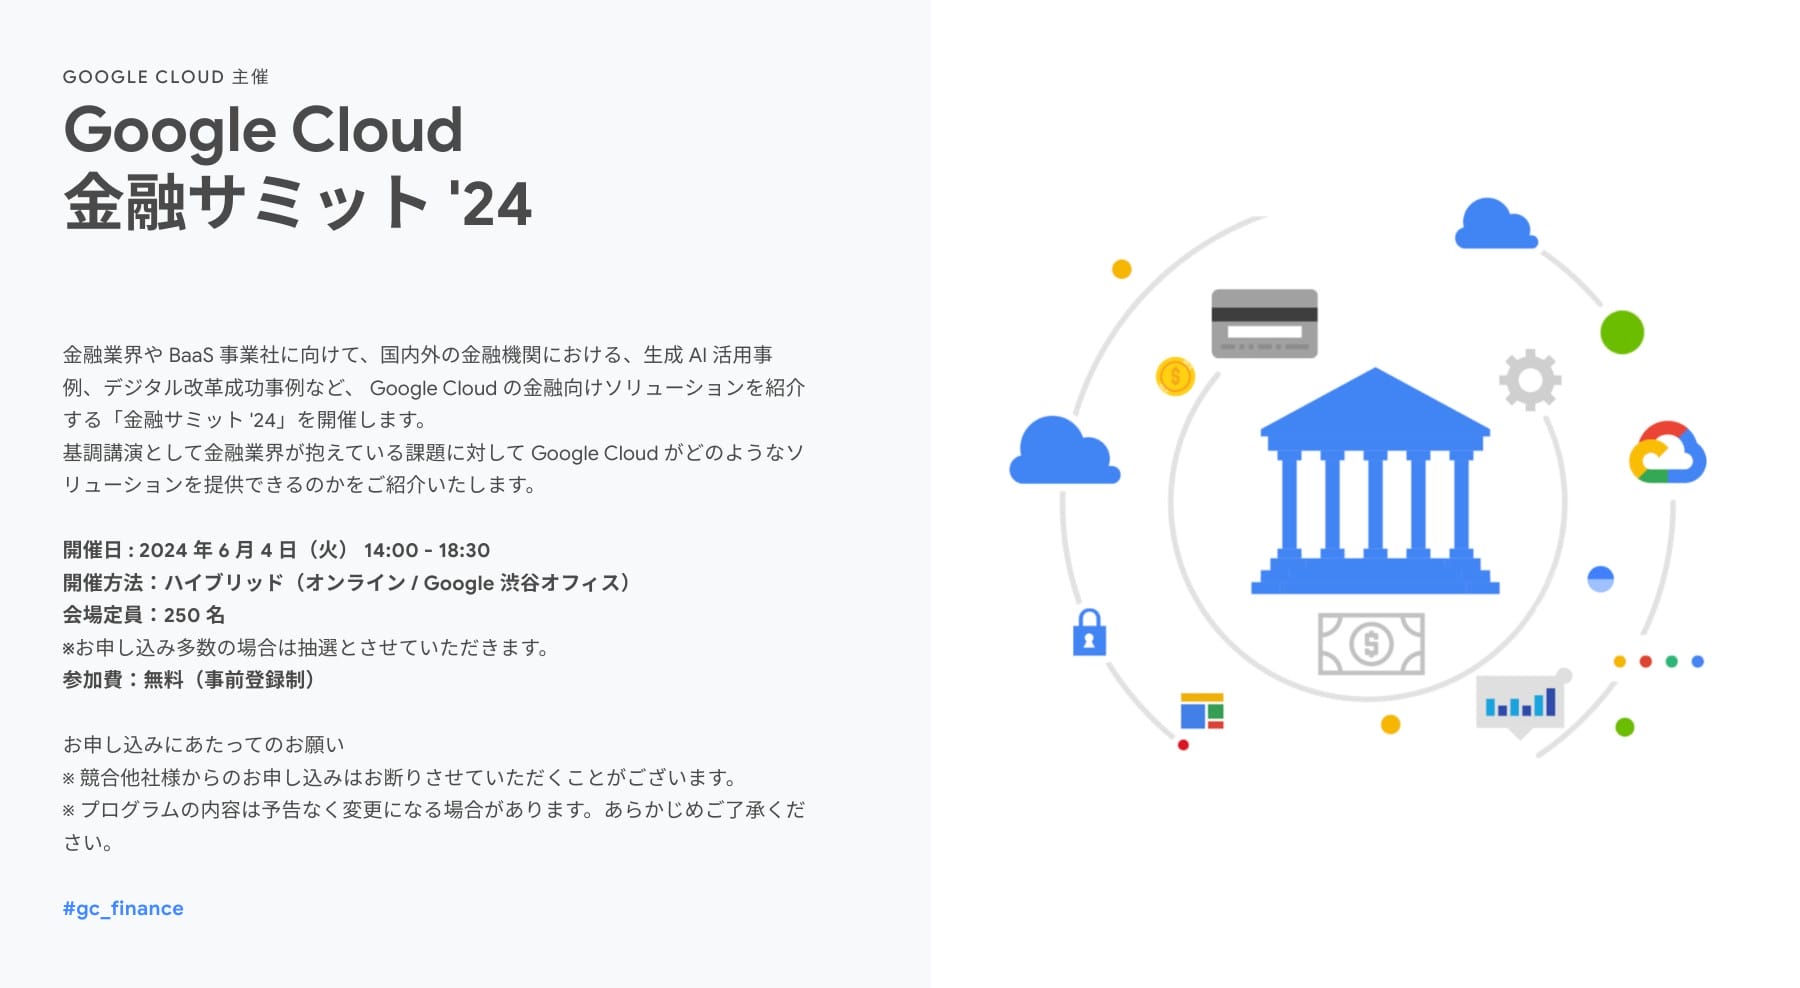 [Google Cloud] Google Cloud 金融サミット '24